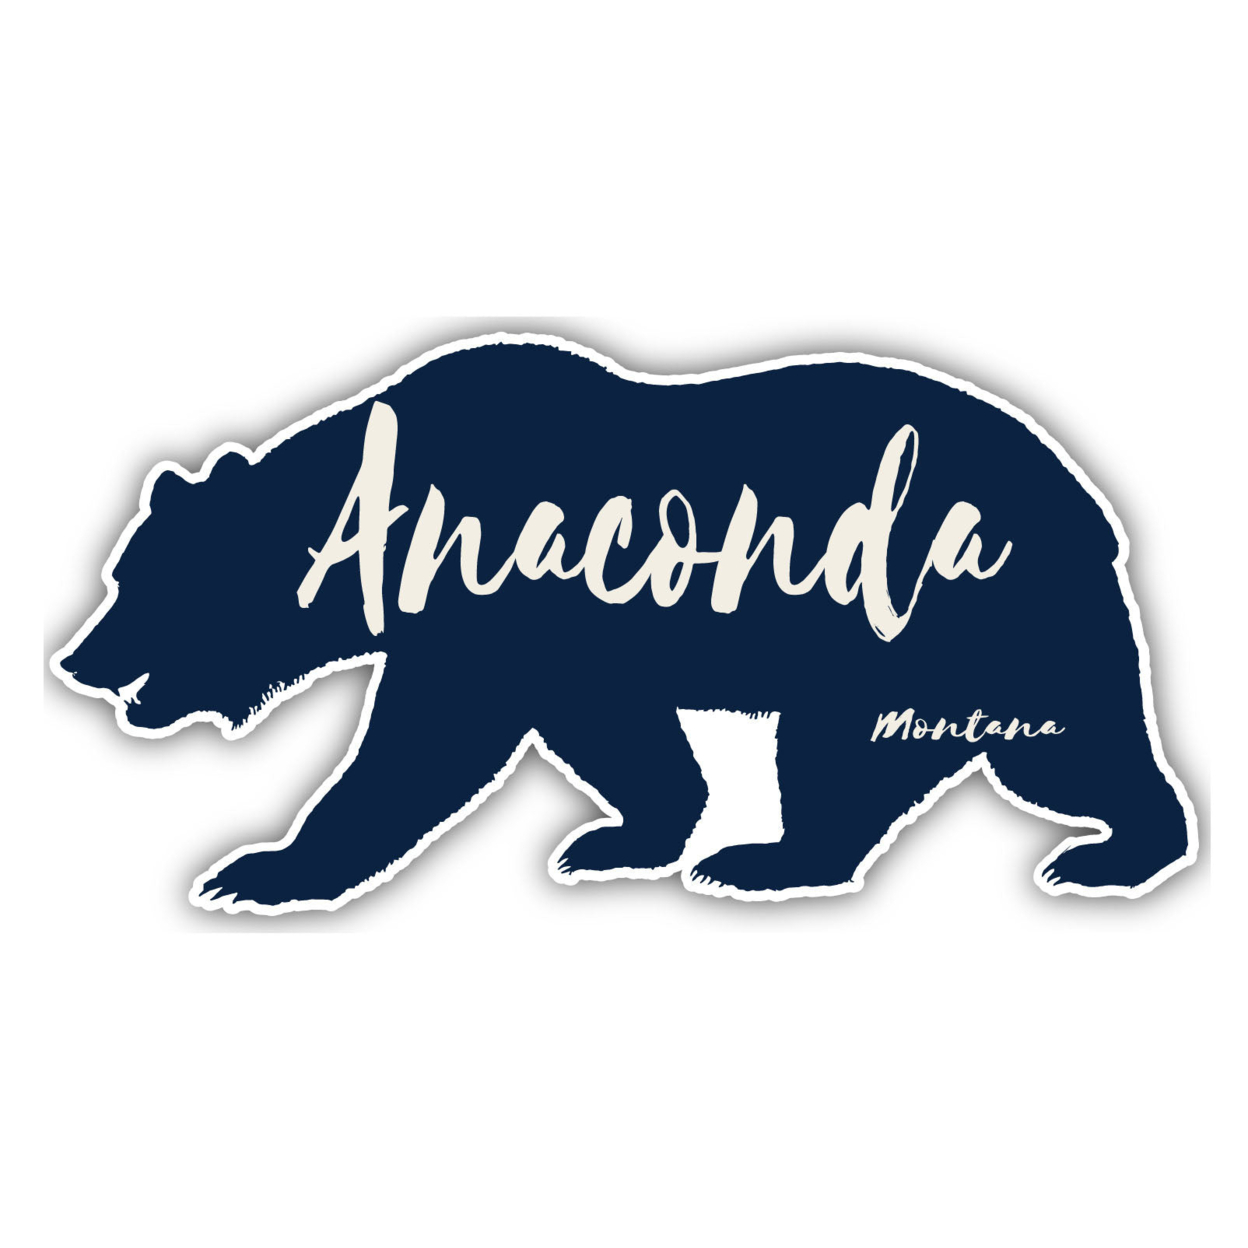 Anaconda Montana Souvenir Decorative Stickers (Choose Theme And Size) - 4-Pack, 6-Inch, Bear